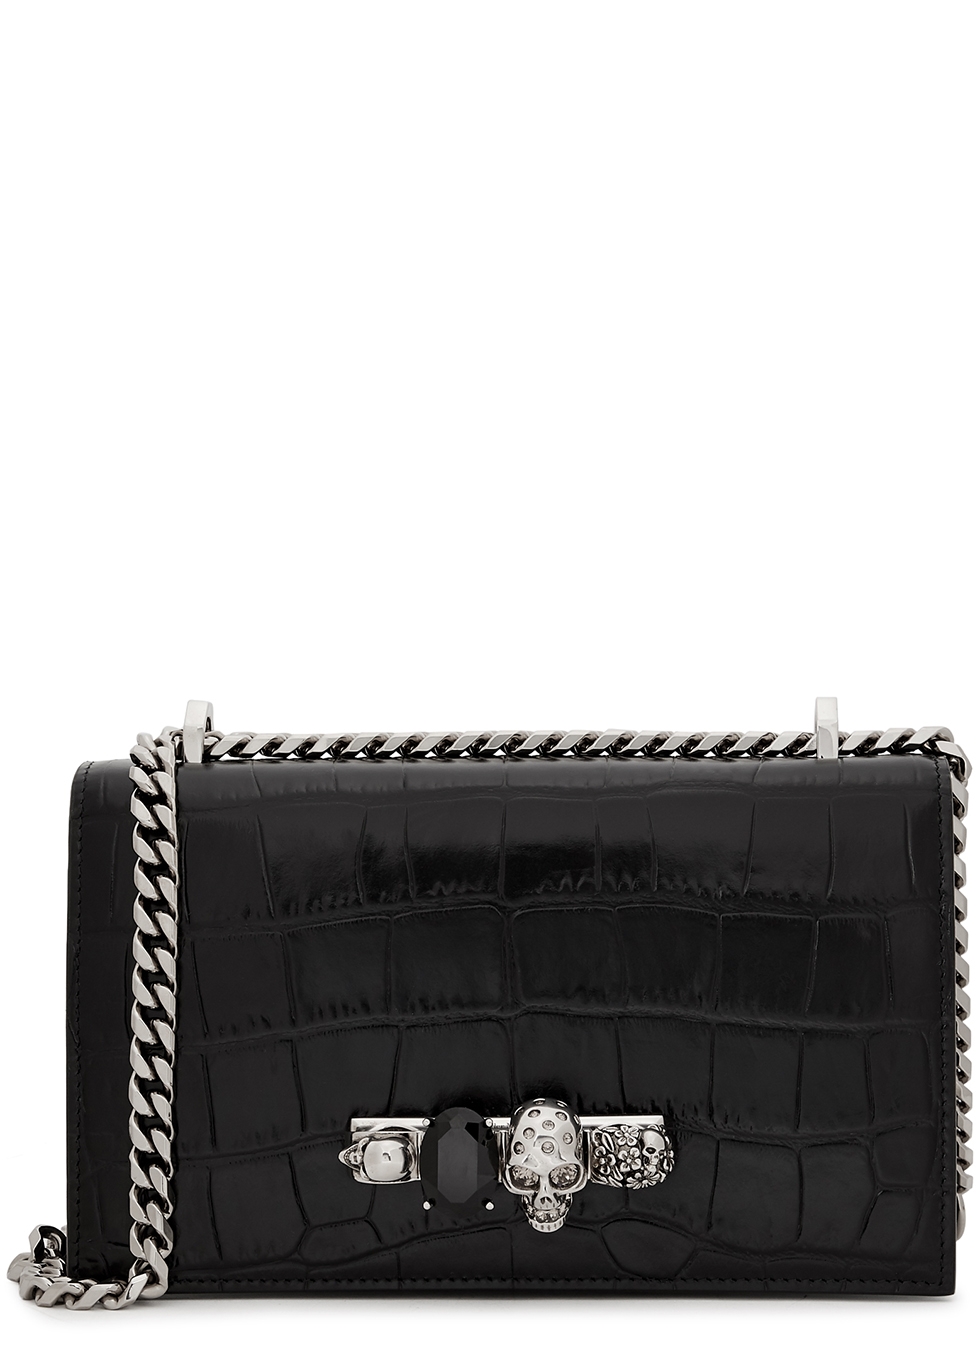 Alexander McQueen The Jewelled Satchel crocodile-effect leather shoulder bag